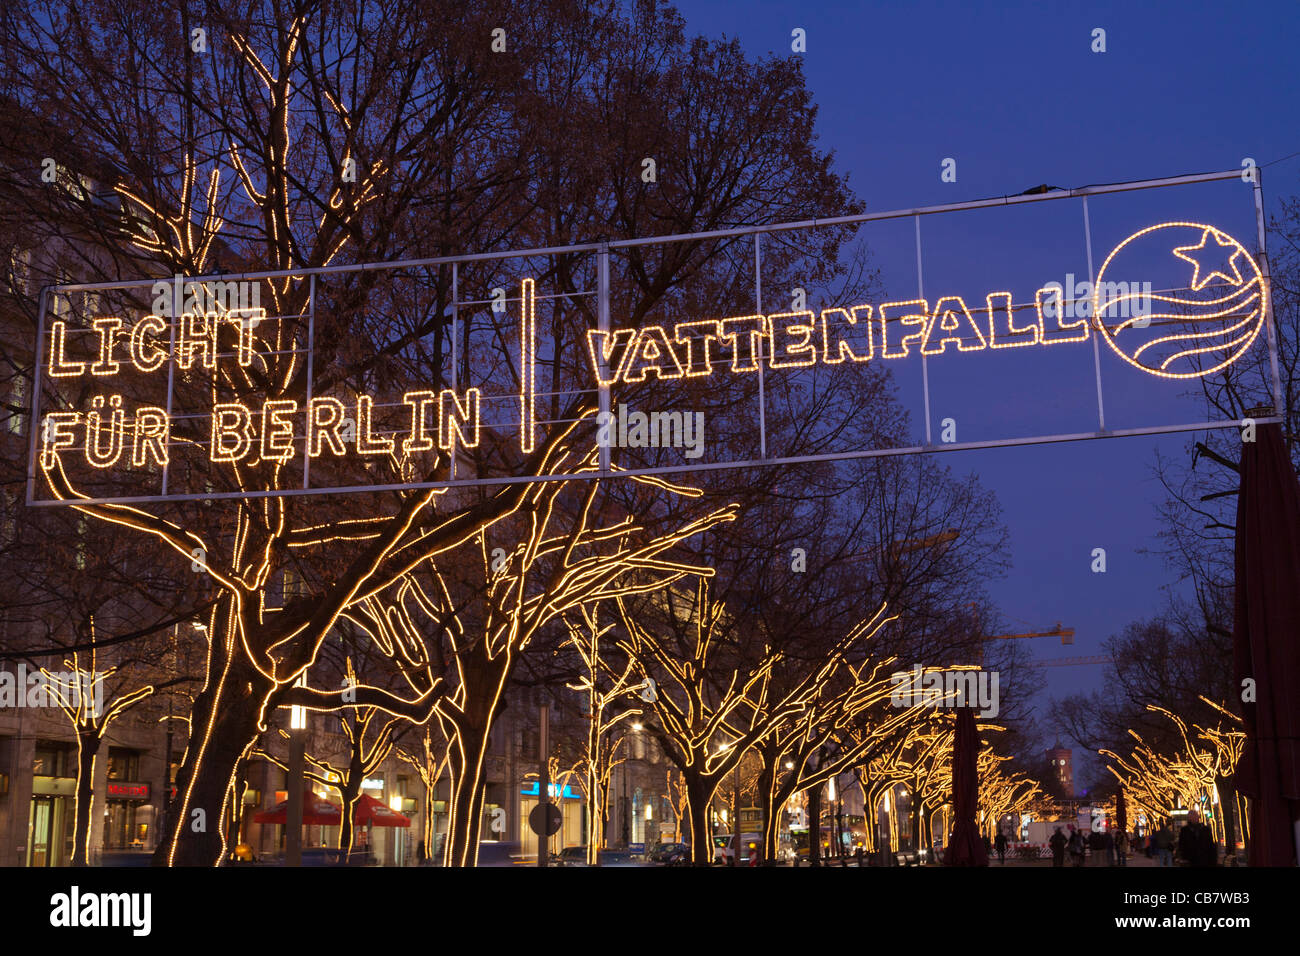 Unter den Linden, Christmas illumination, winter, evening, avenue, street, Vattenfall, Berlin, Germany, Europe Stock Photo